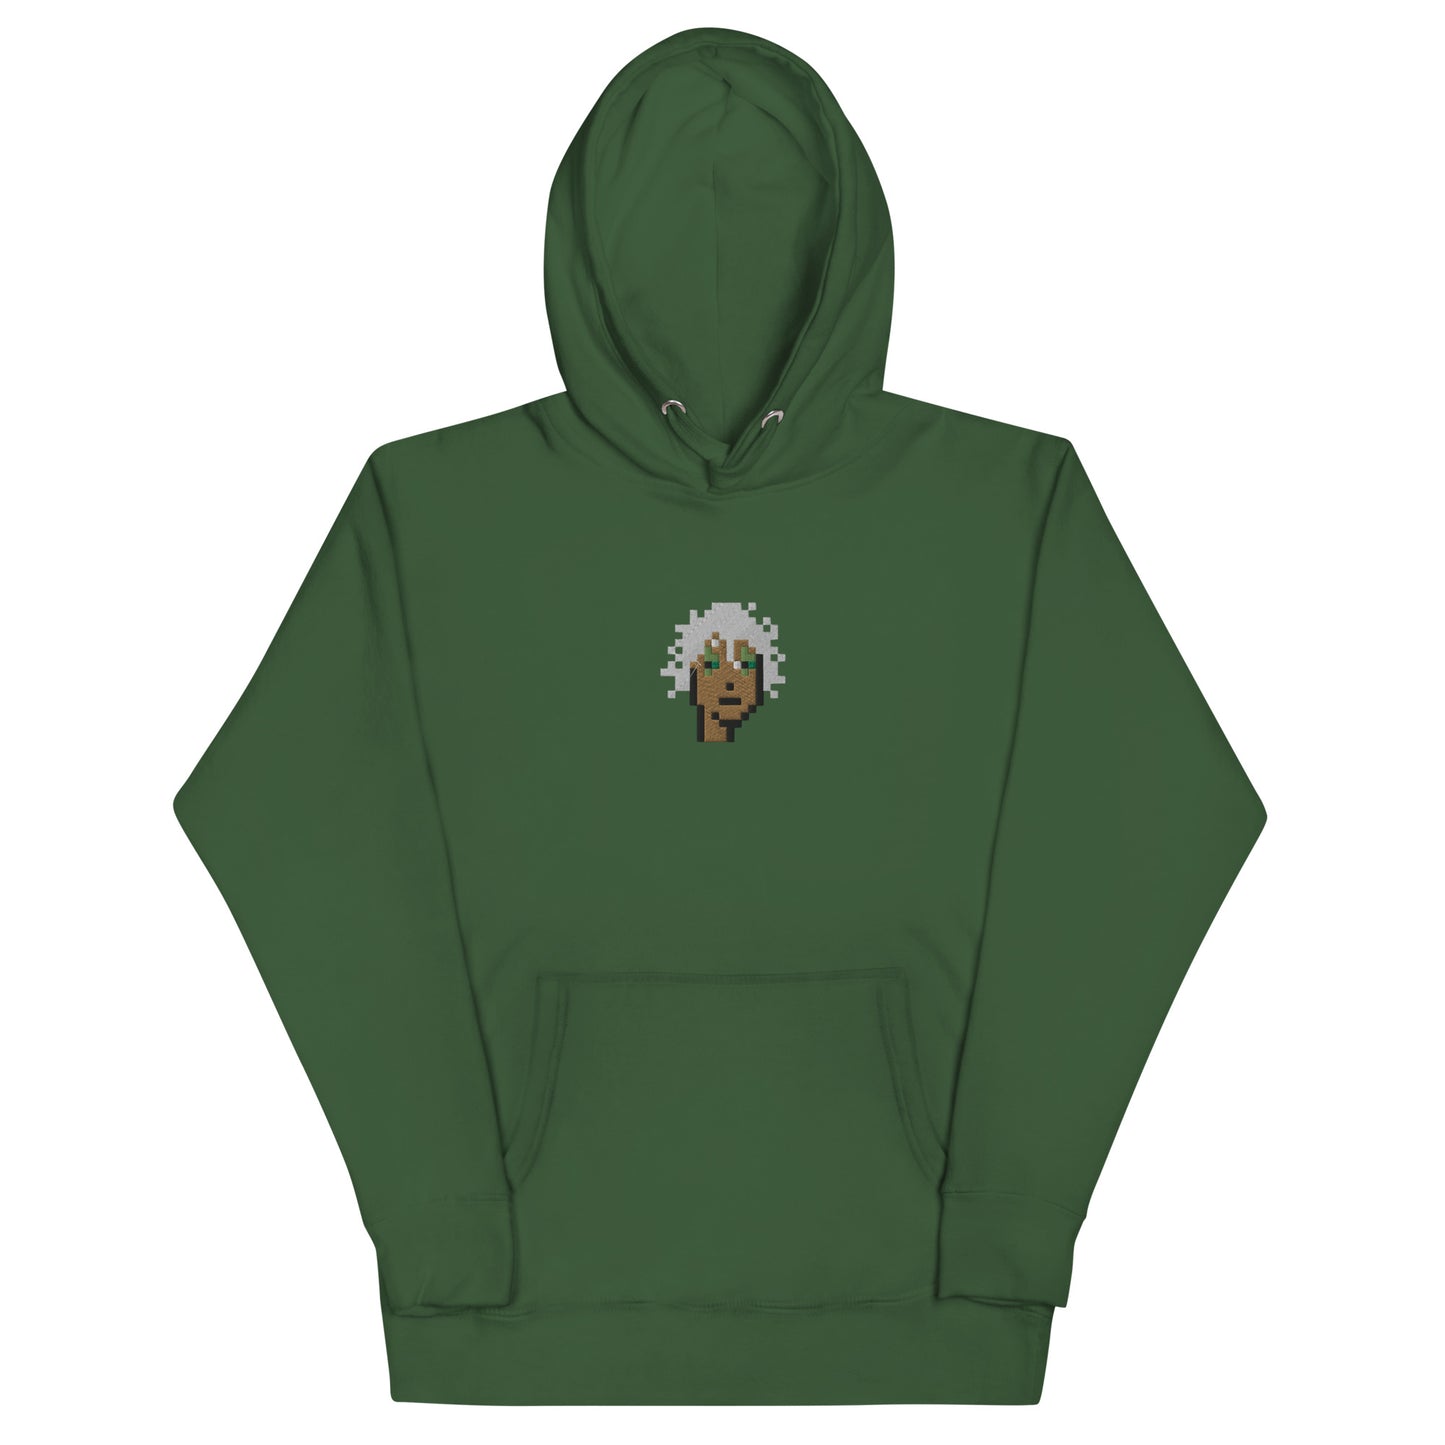 Crypto Punks NFT #9998 Premium Embroidered Hoodie Sweatshirt